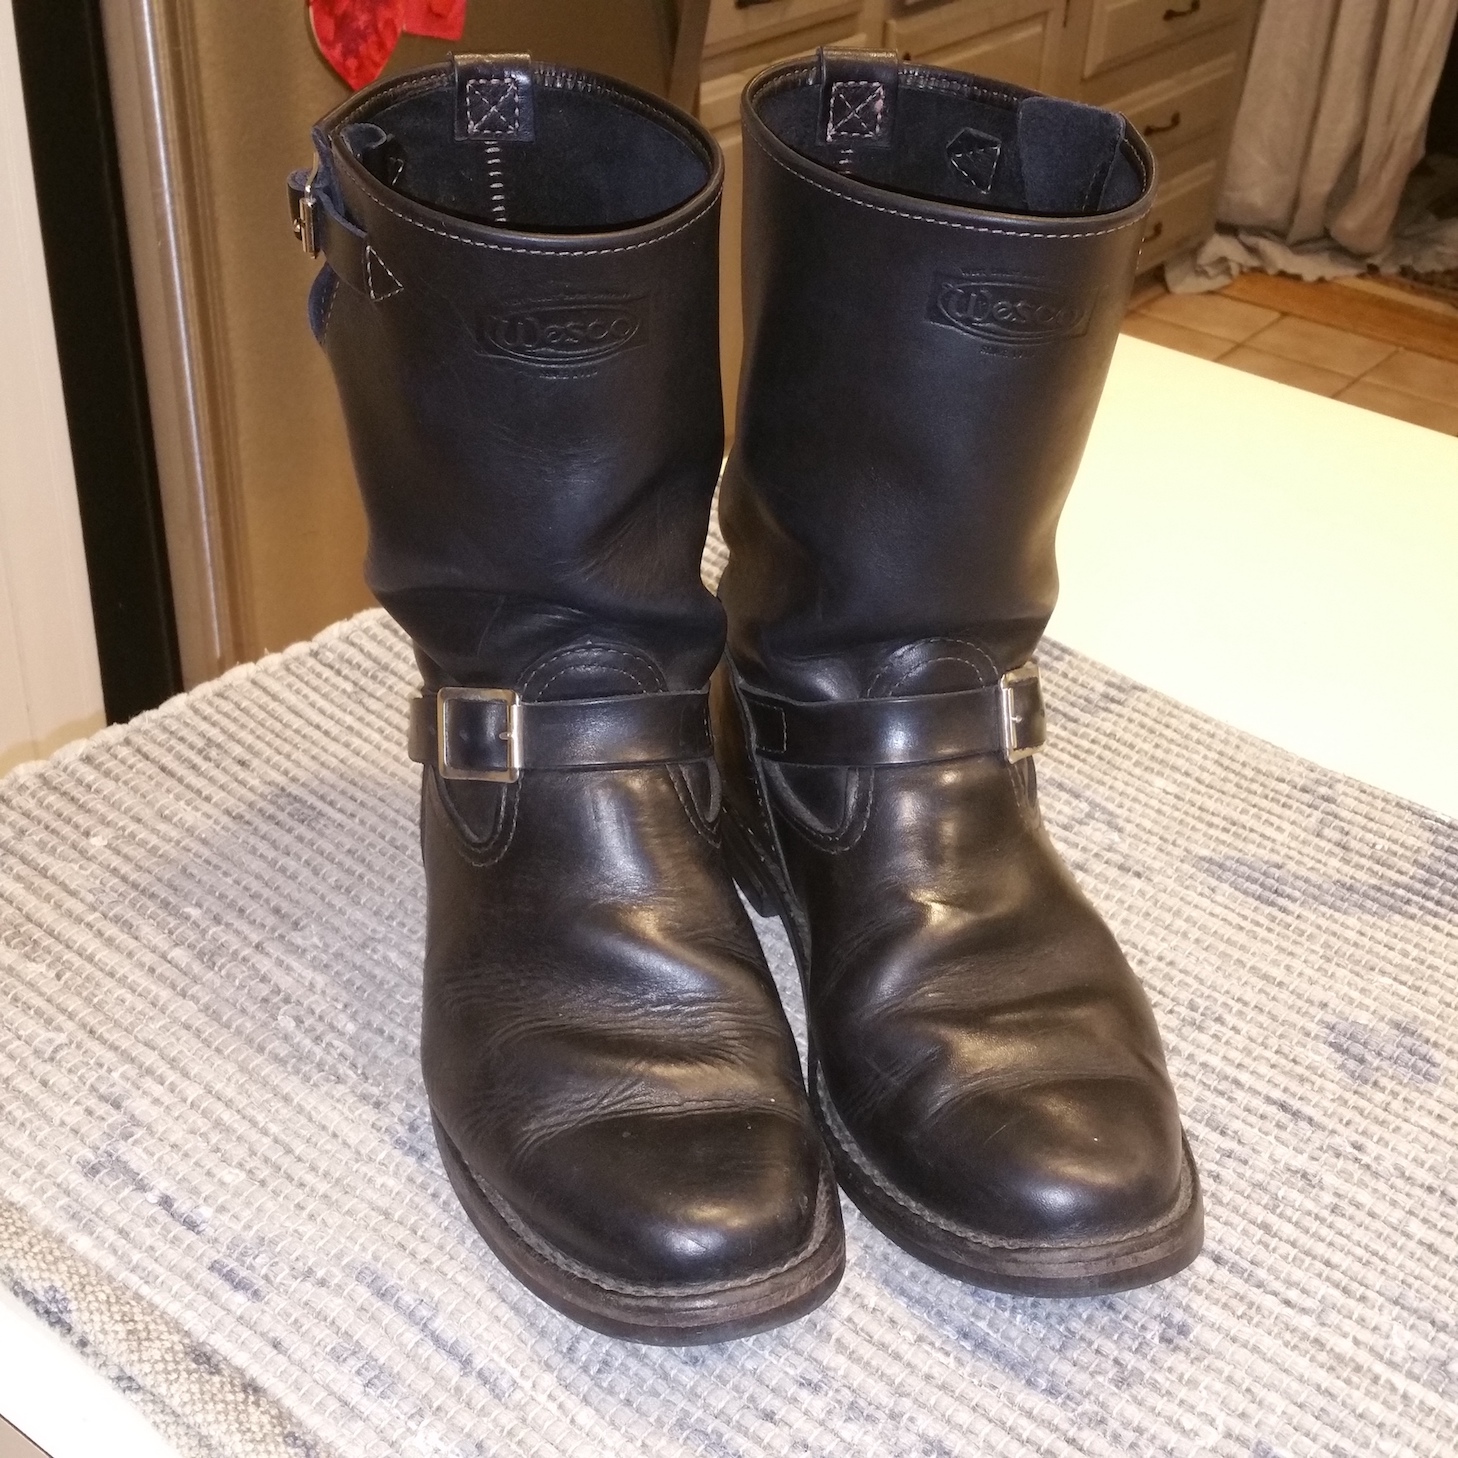 Wesco MP toe engineer boots size 11E $350 | The Fedora Lounge